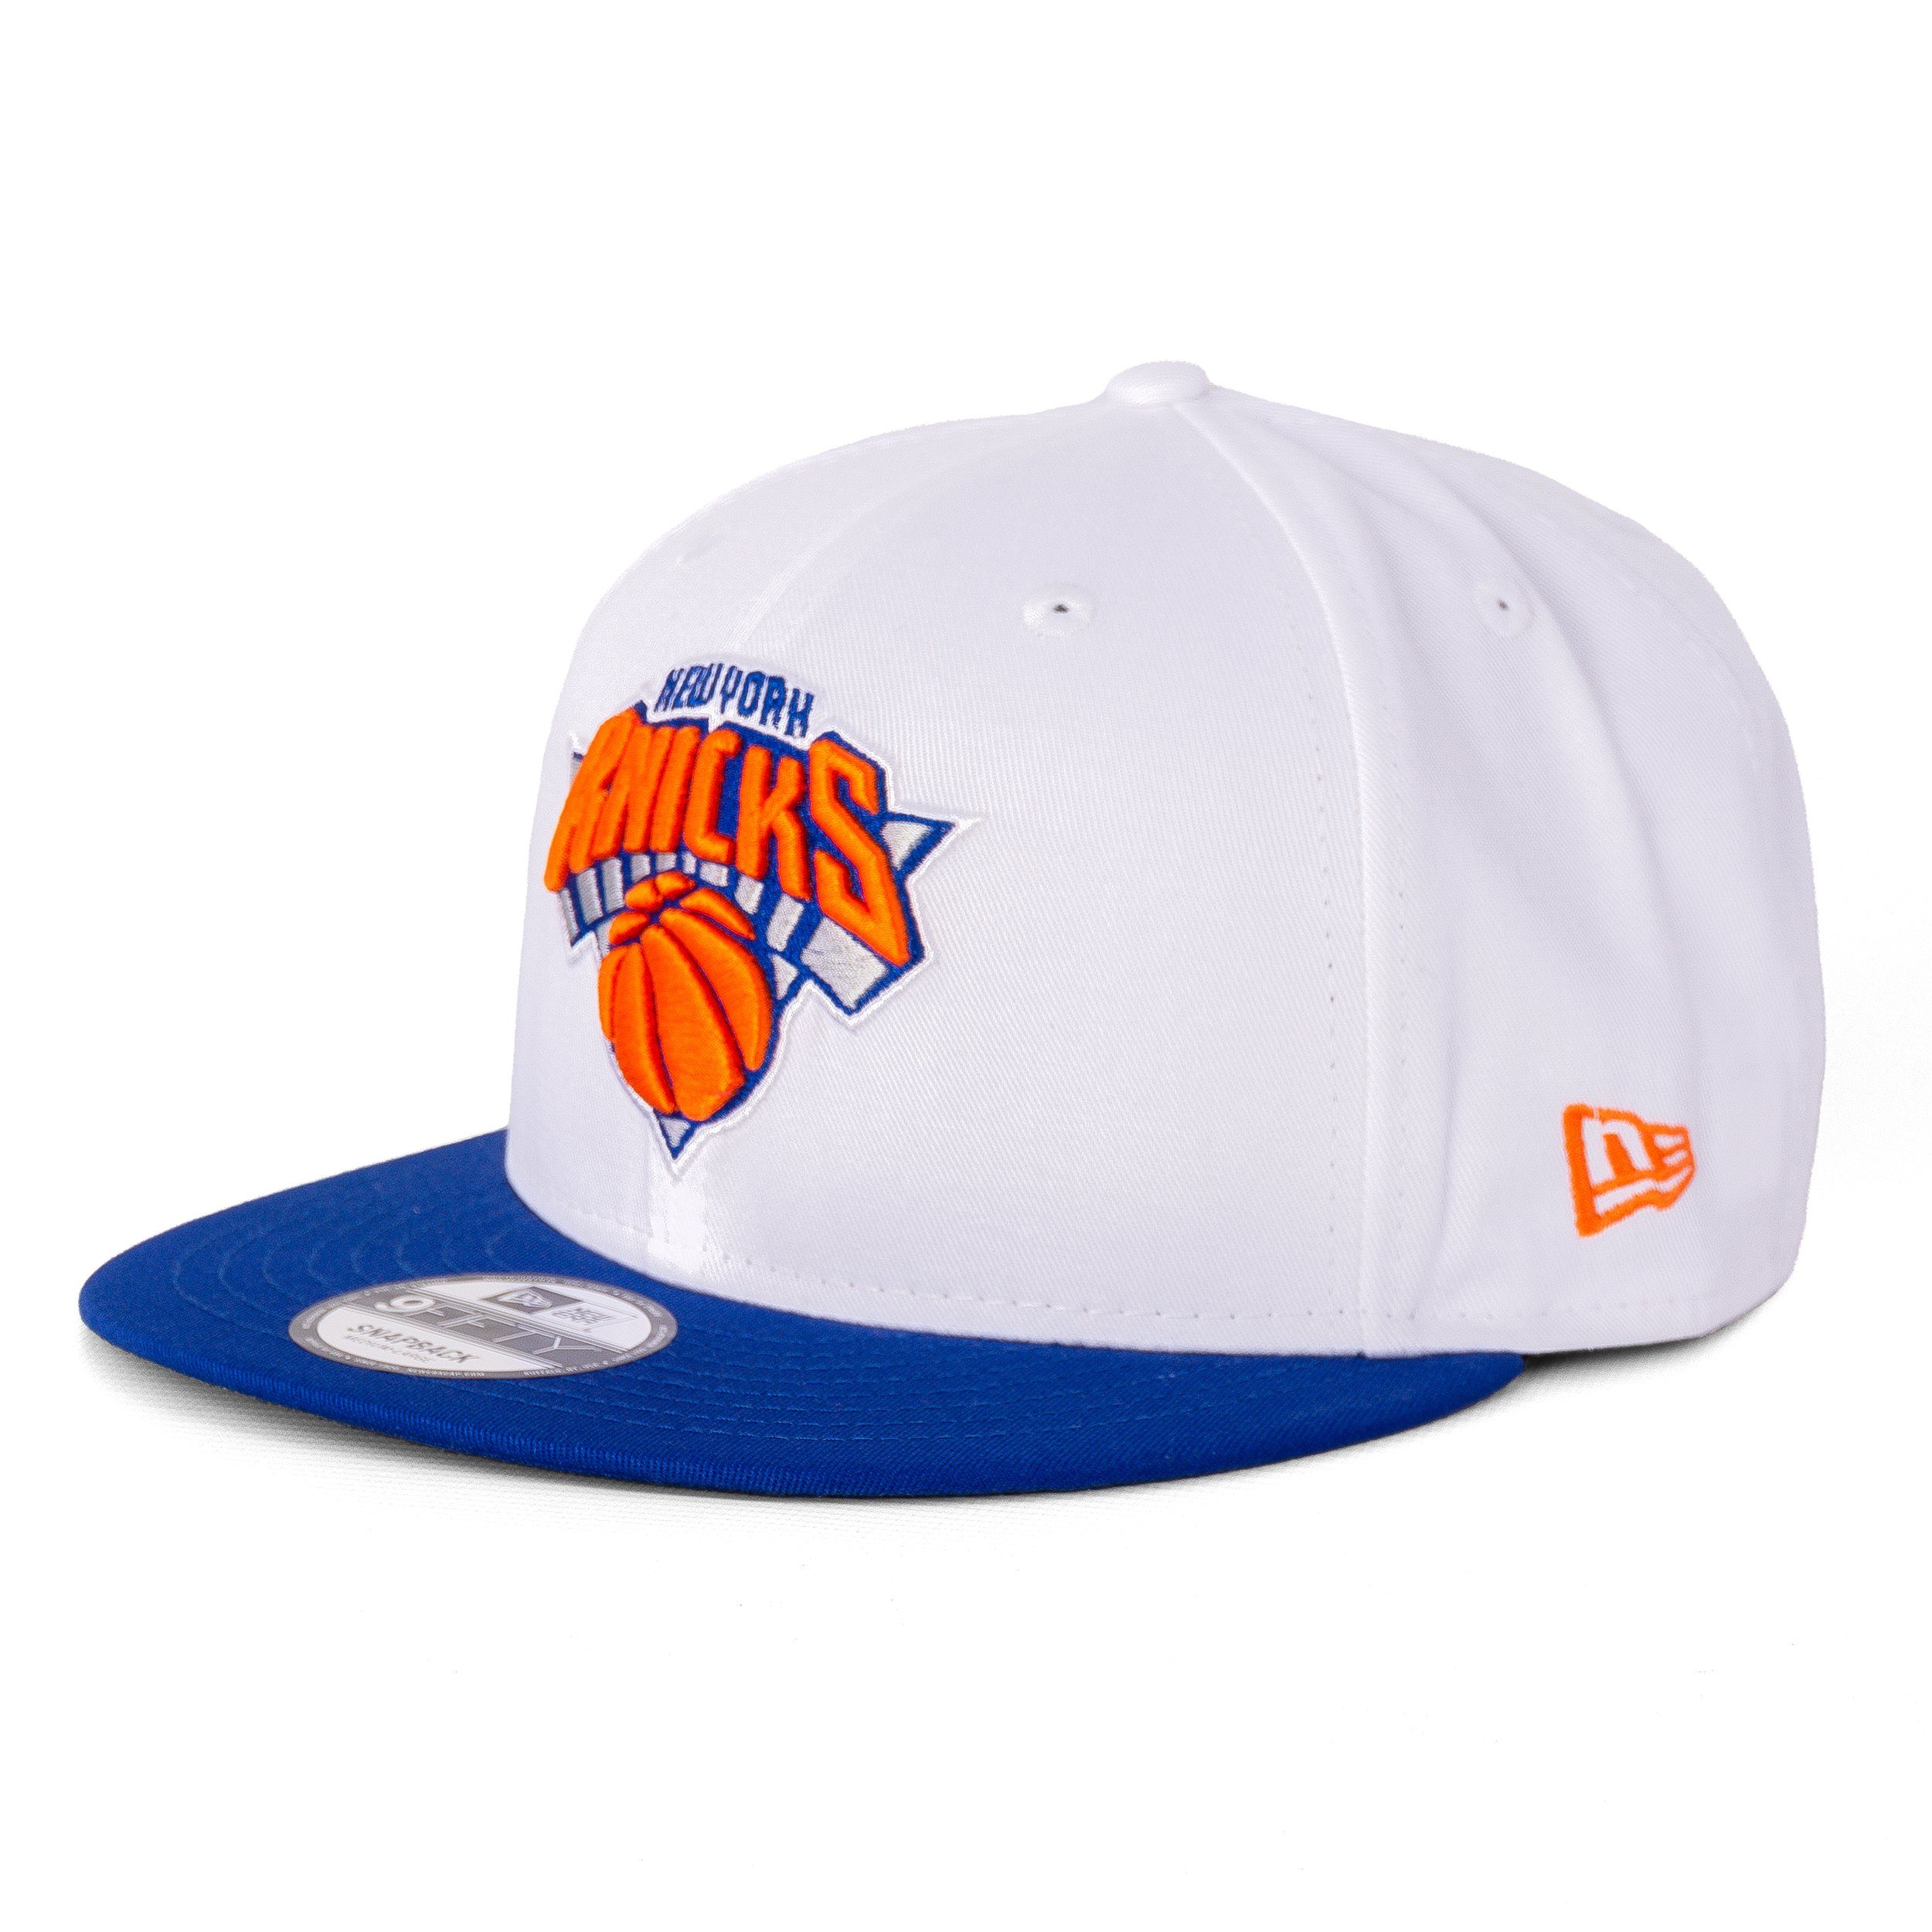 New New Era Cap York Era Knicks NBA Baseball 9Fifty Cap (1-St) New